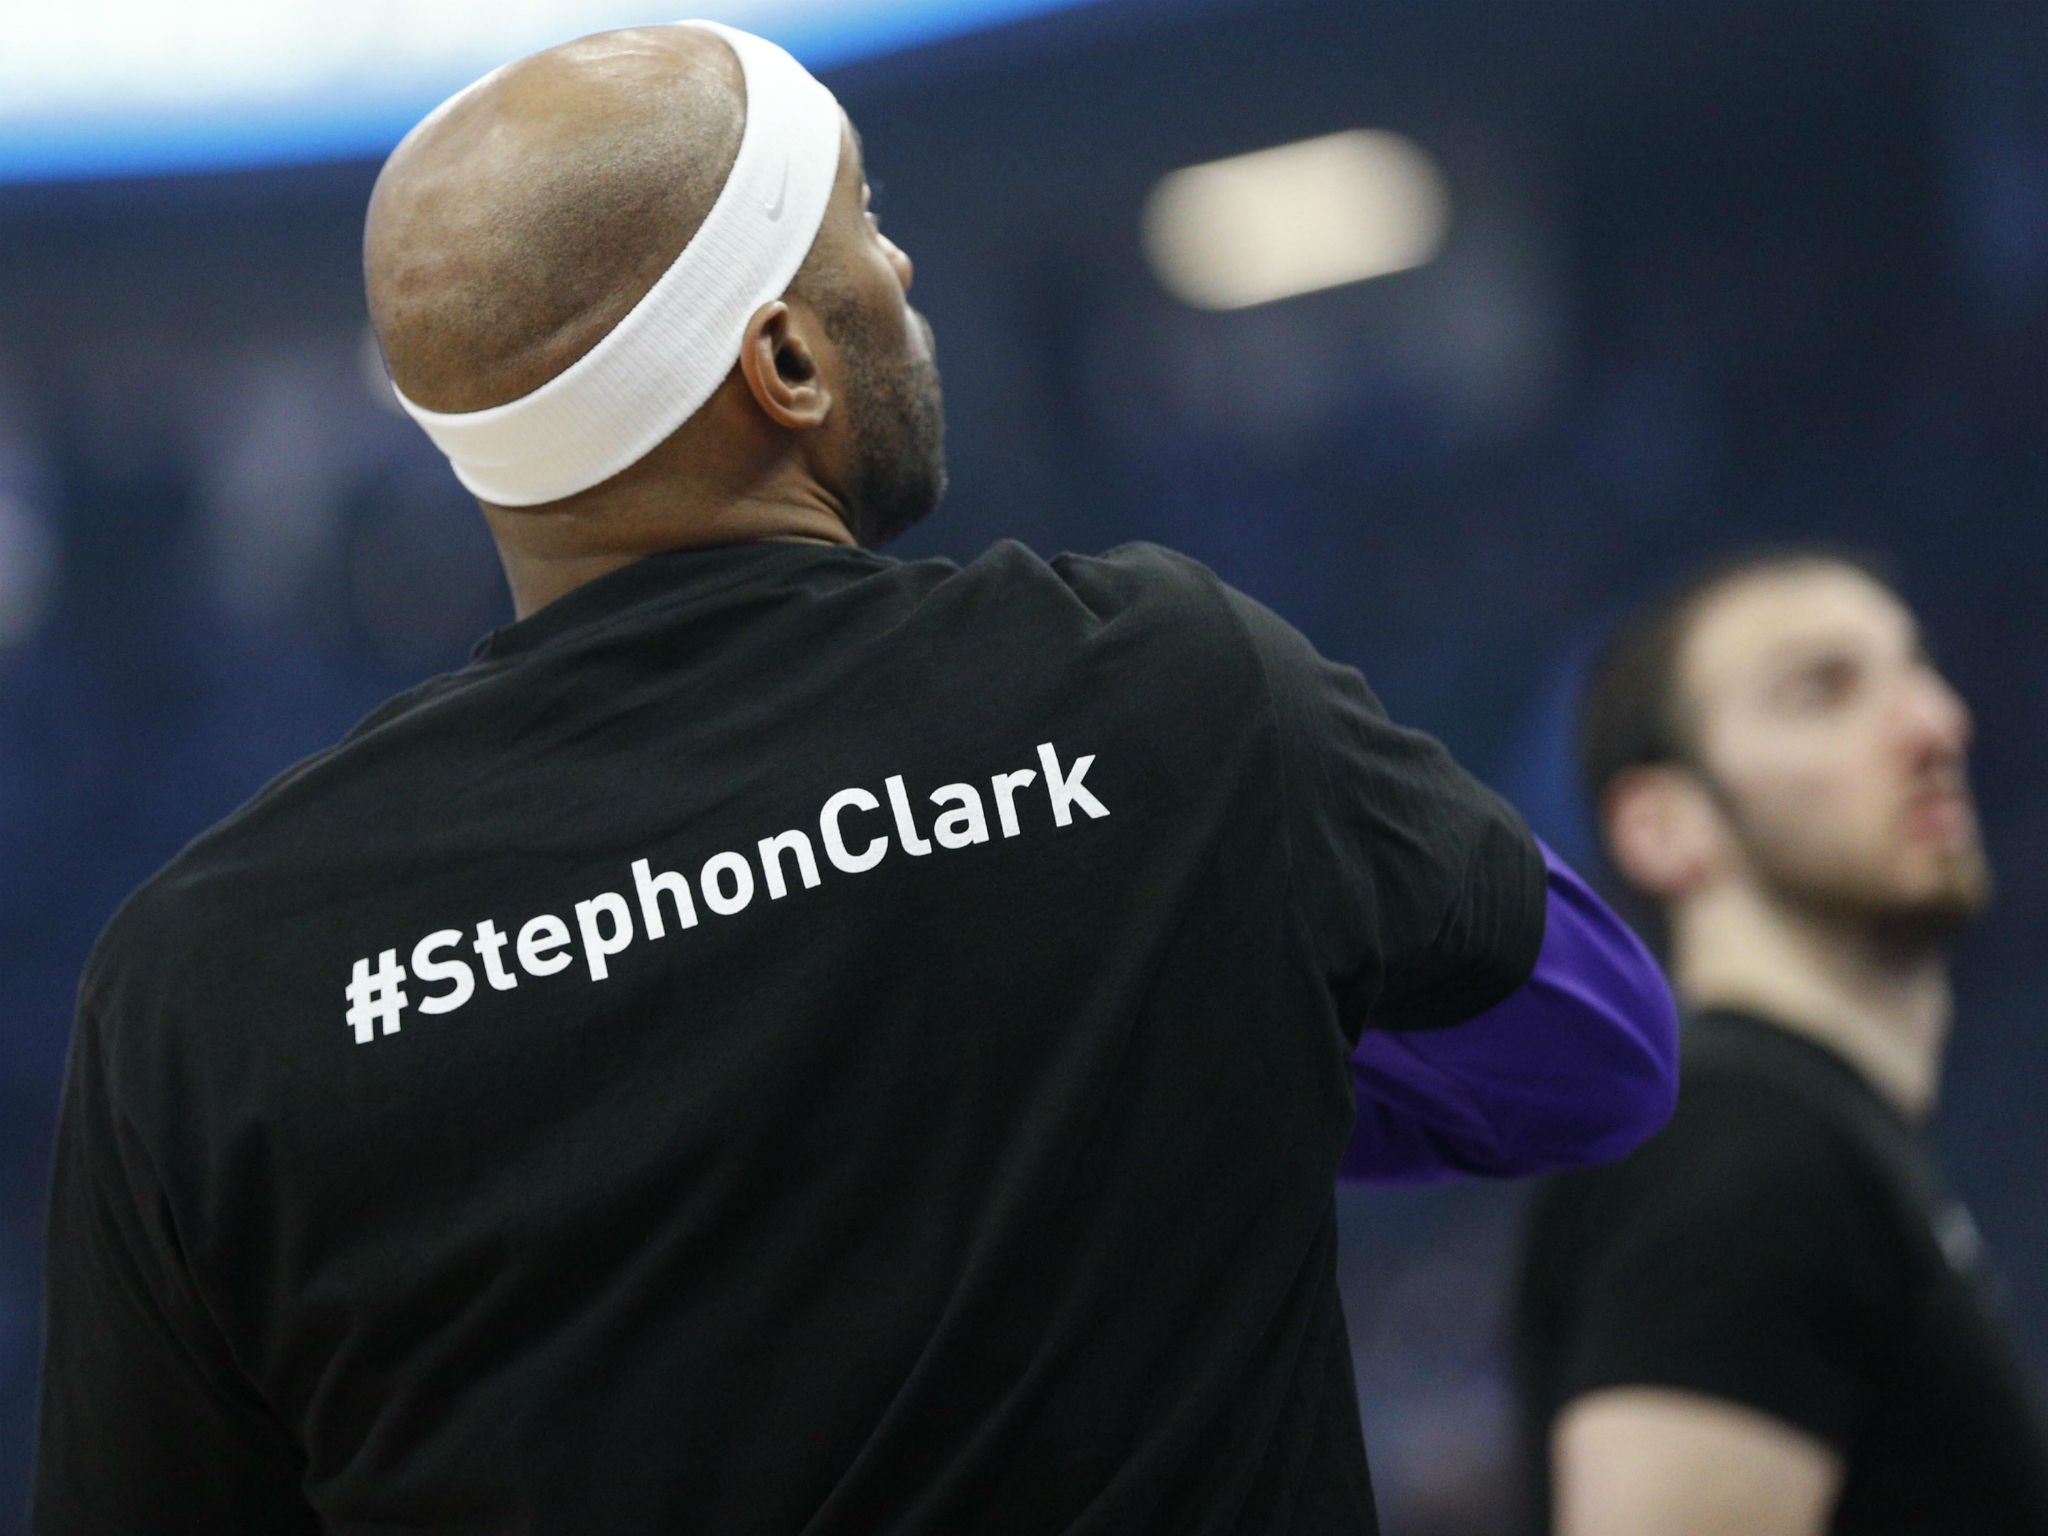 Sacramento Kings forward Vince Carter wears a shirt during warmups honouring Stephon Clark